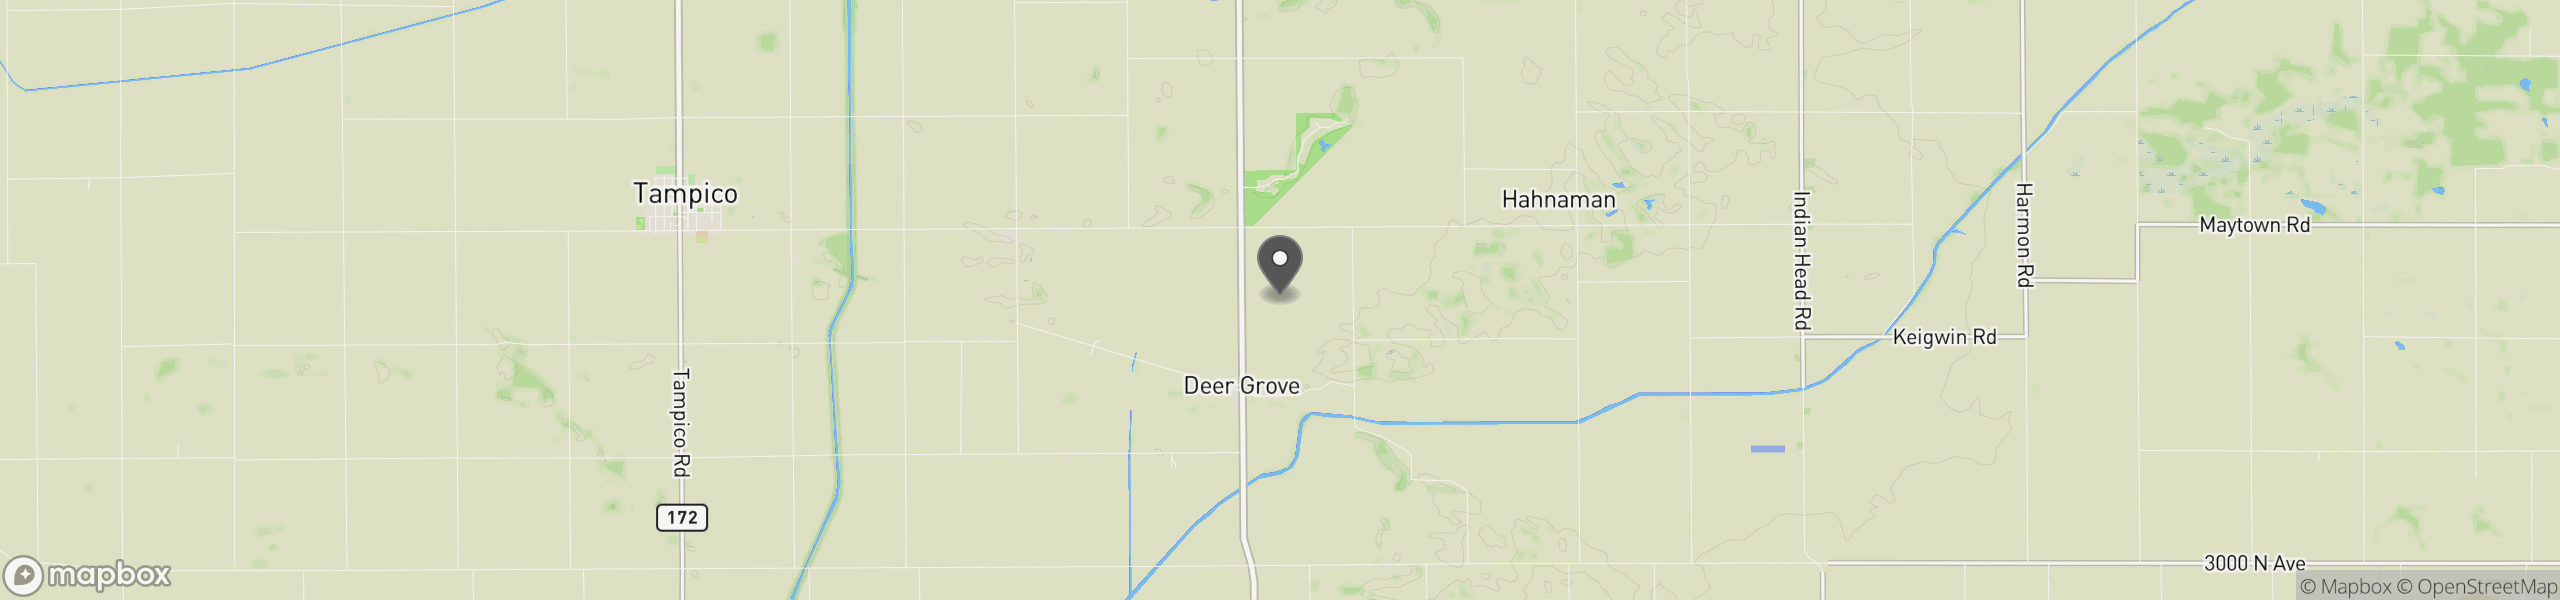 Deer Grove, IL 61243